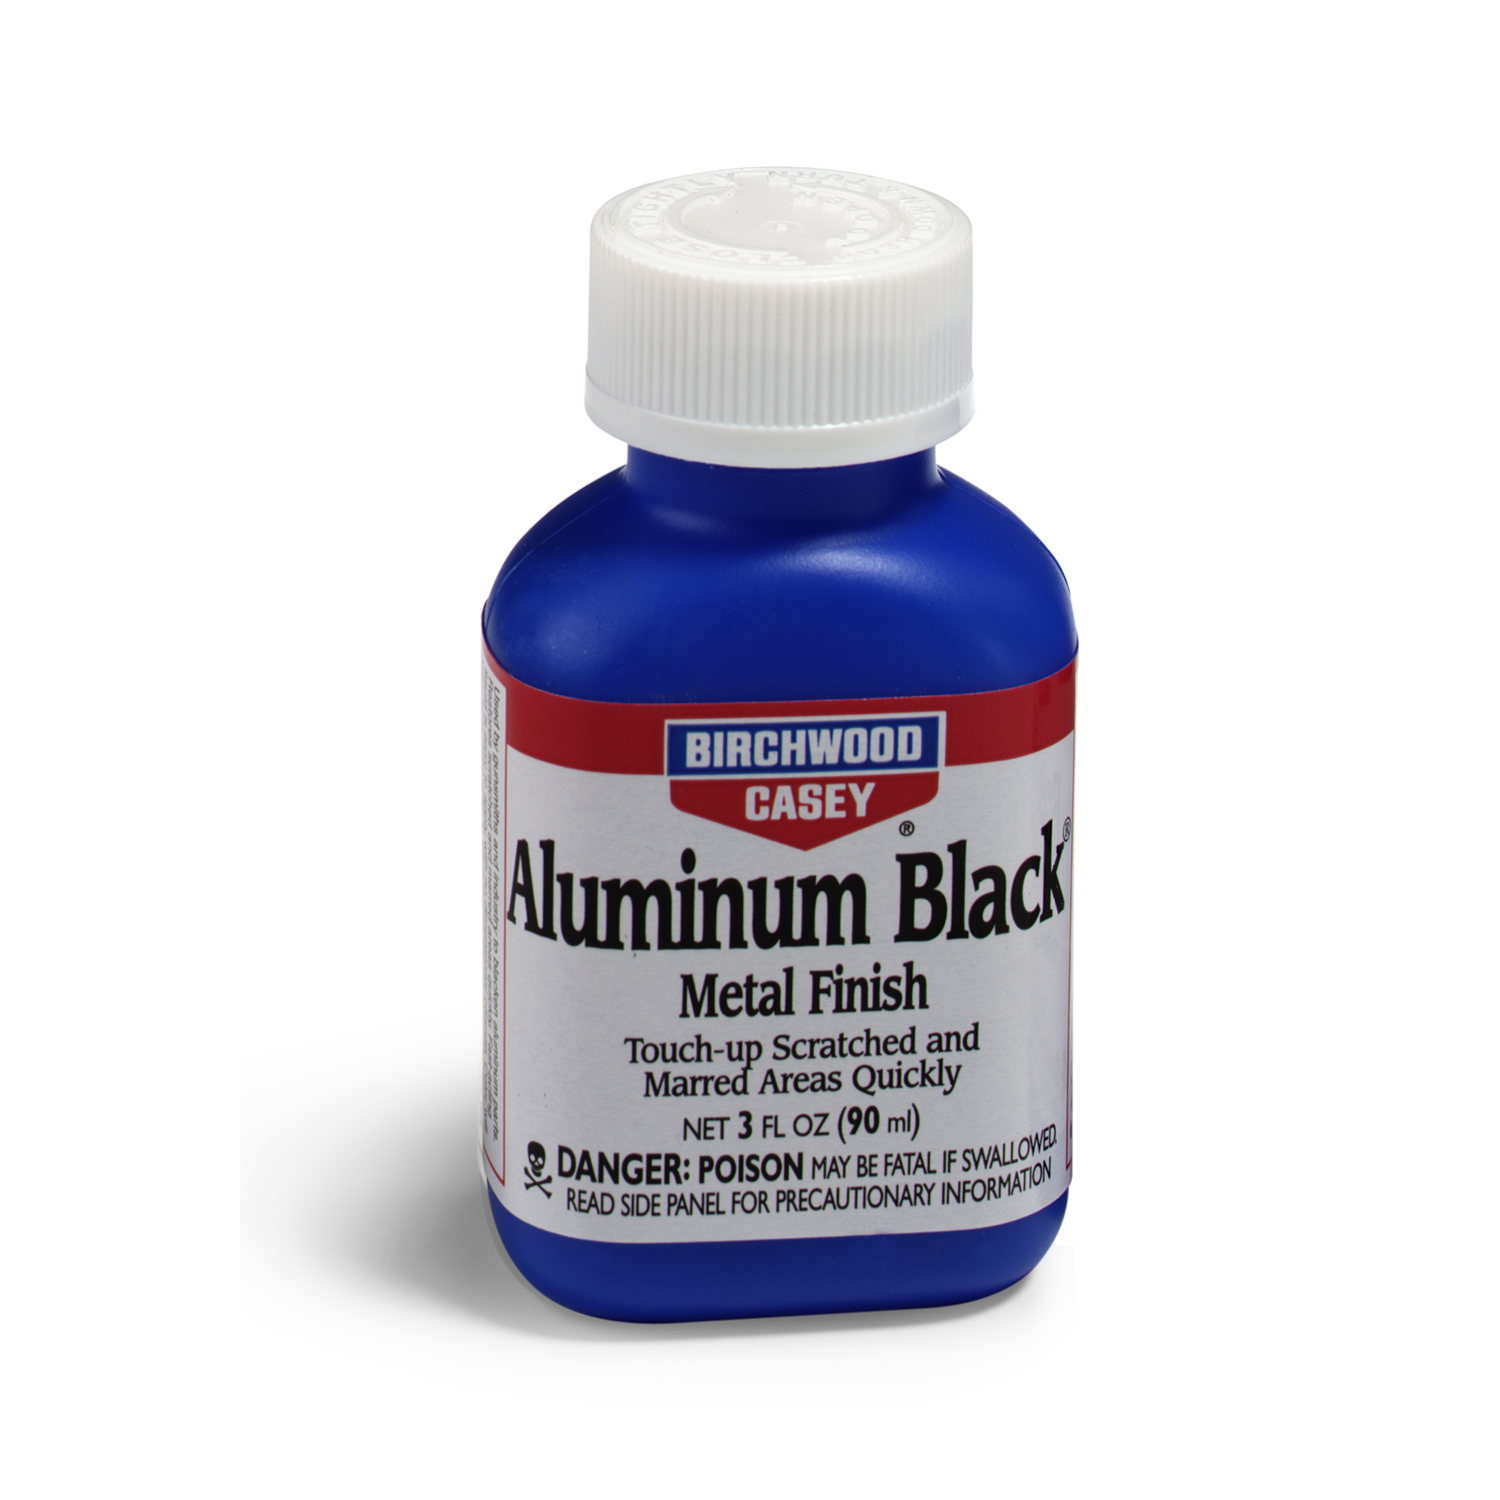 BIRCHWOOD CASEY ALUMINUM BLACK METAL FINISH - Accuracy Plus